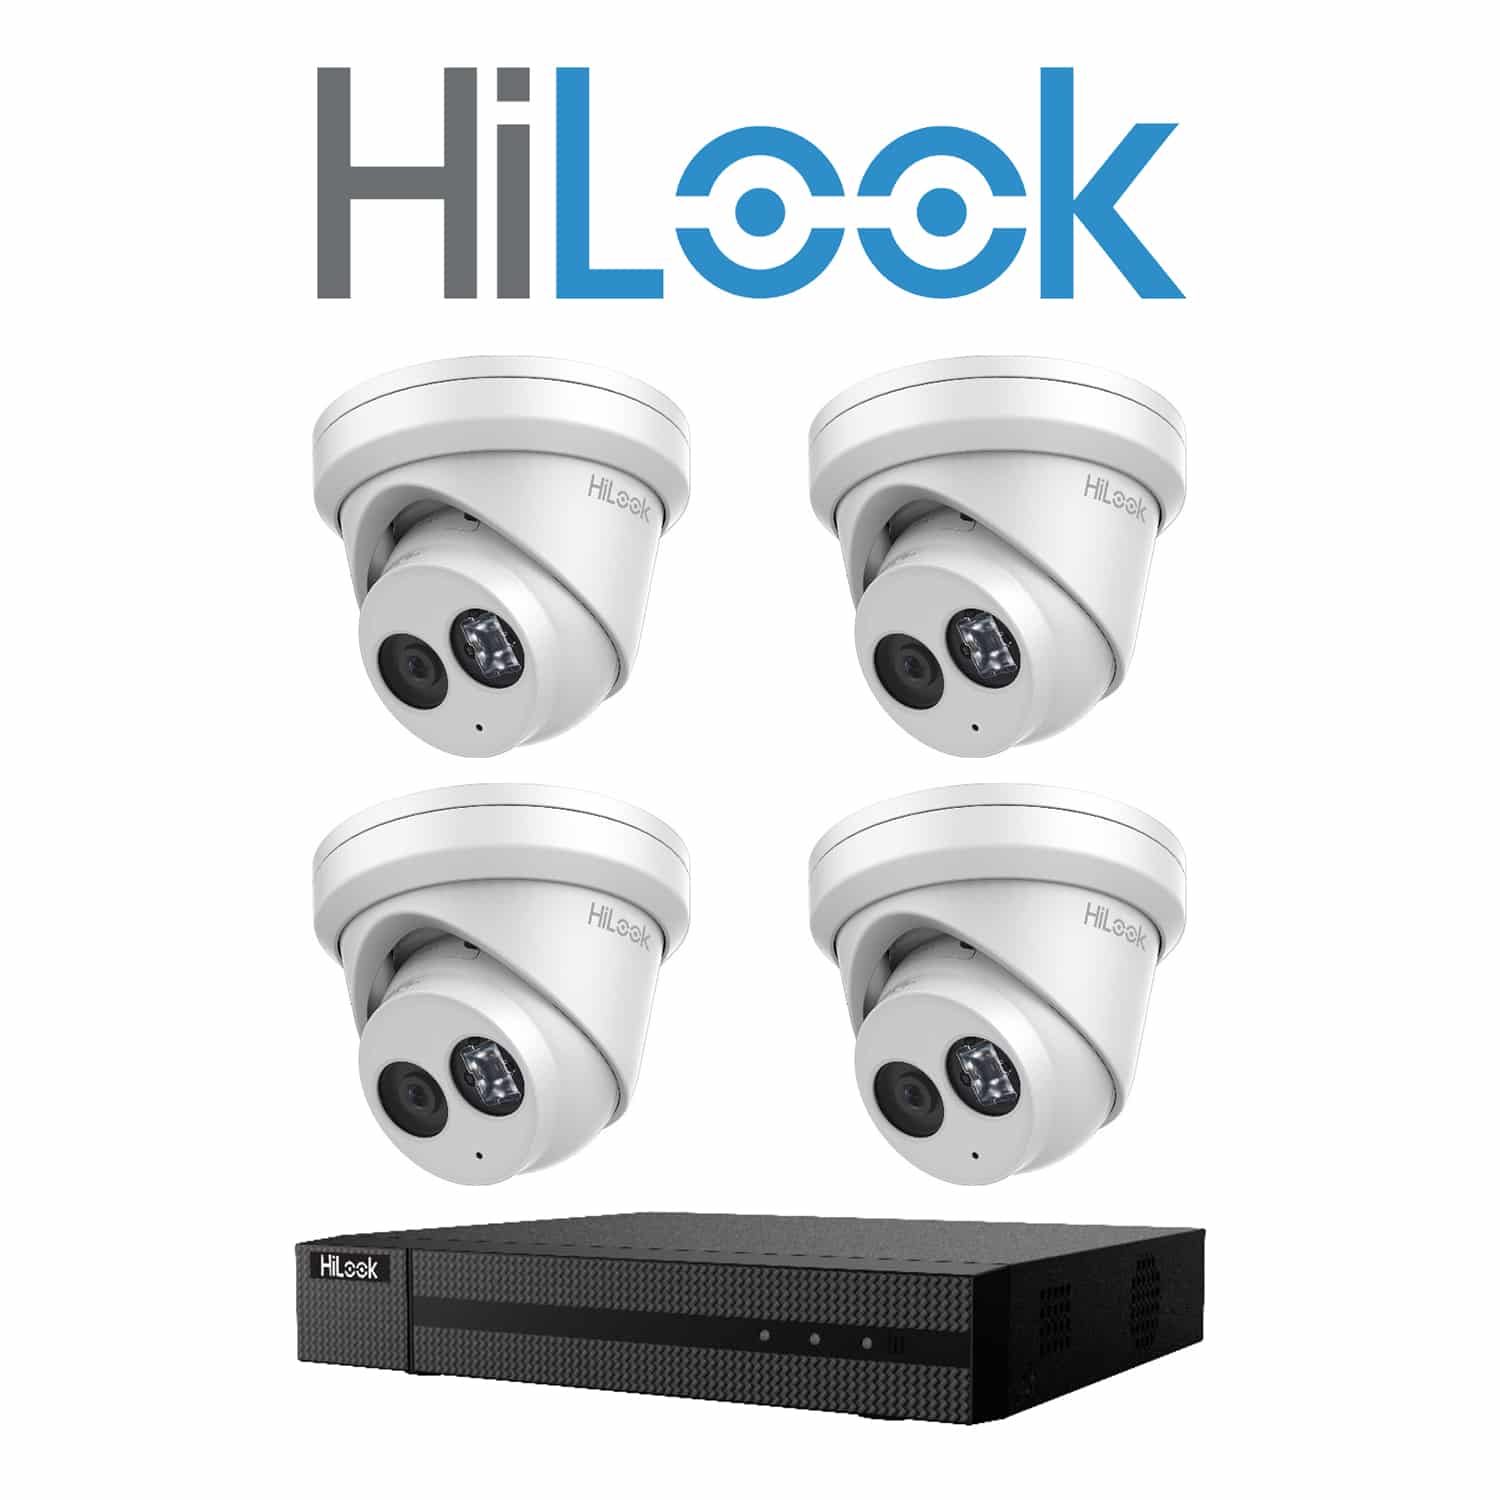 Hikvision Hilook 4 Camera kit